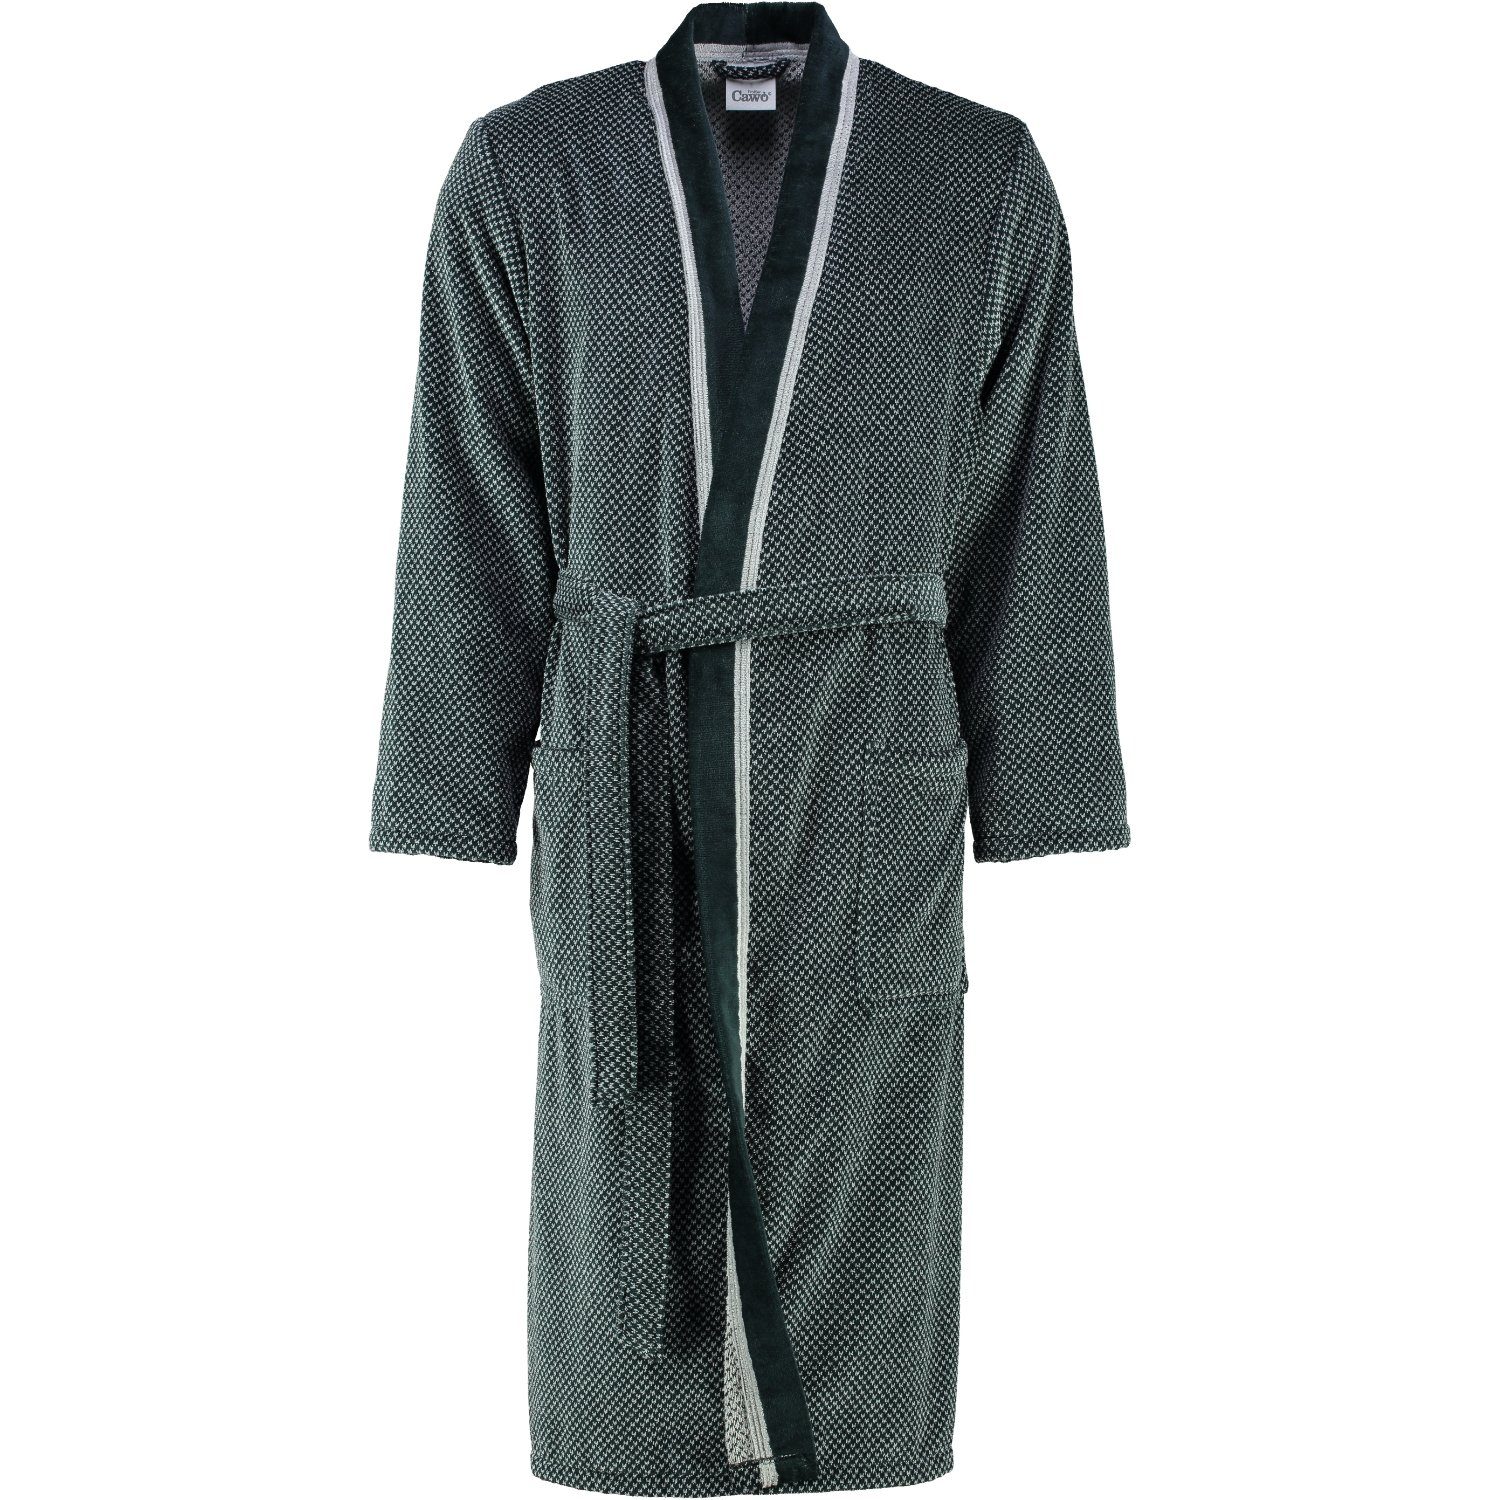 Cawö Herrenbademantel 4839, Langform, Baumwolle, Kimonoform, Gürtel, Kimono Form 79 silber schwarz